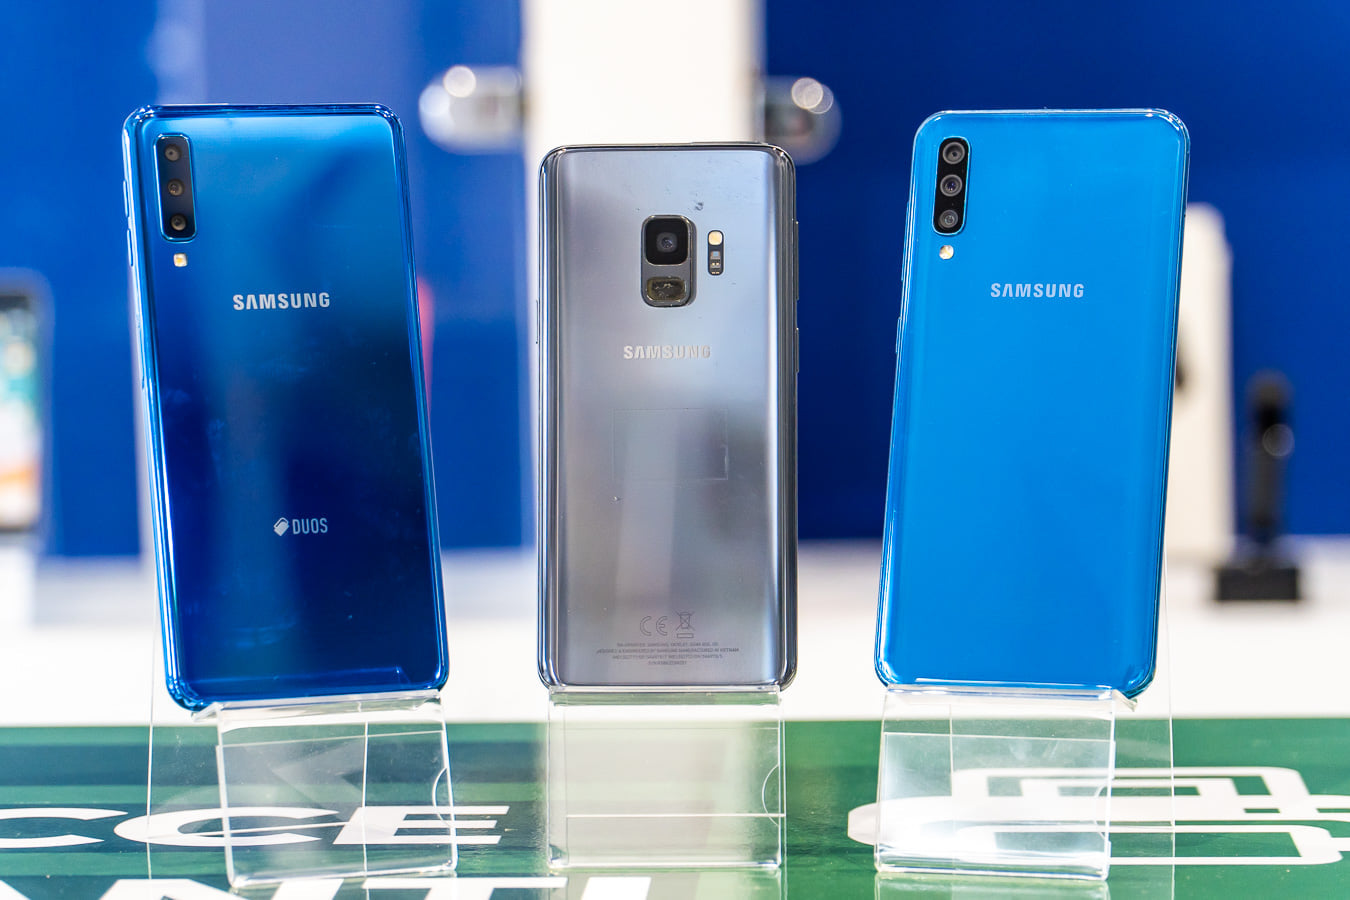 Samsung, pesce essiccato e "tre stelle" - dgtaleitalia